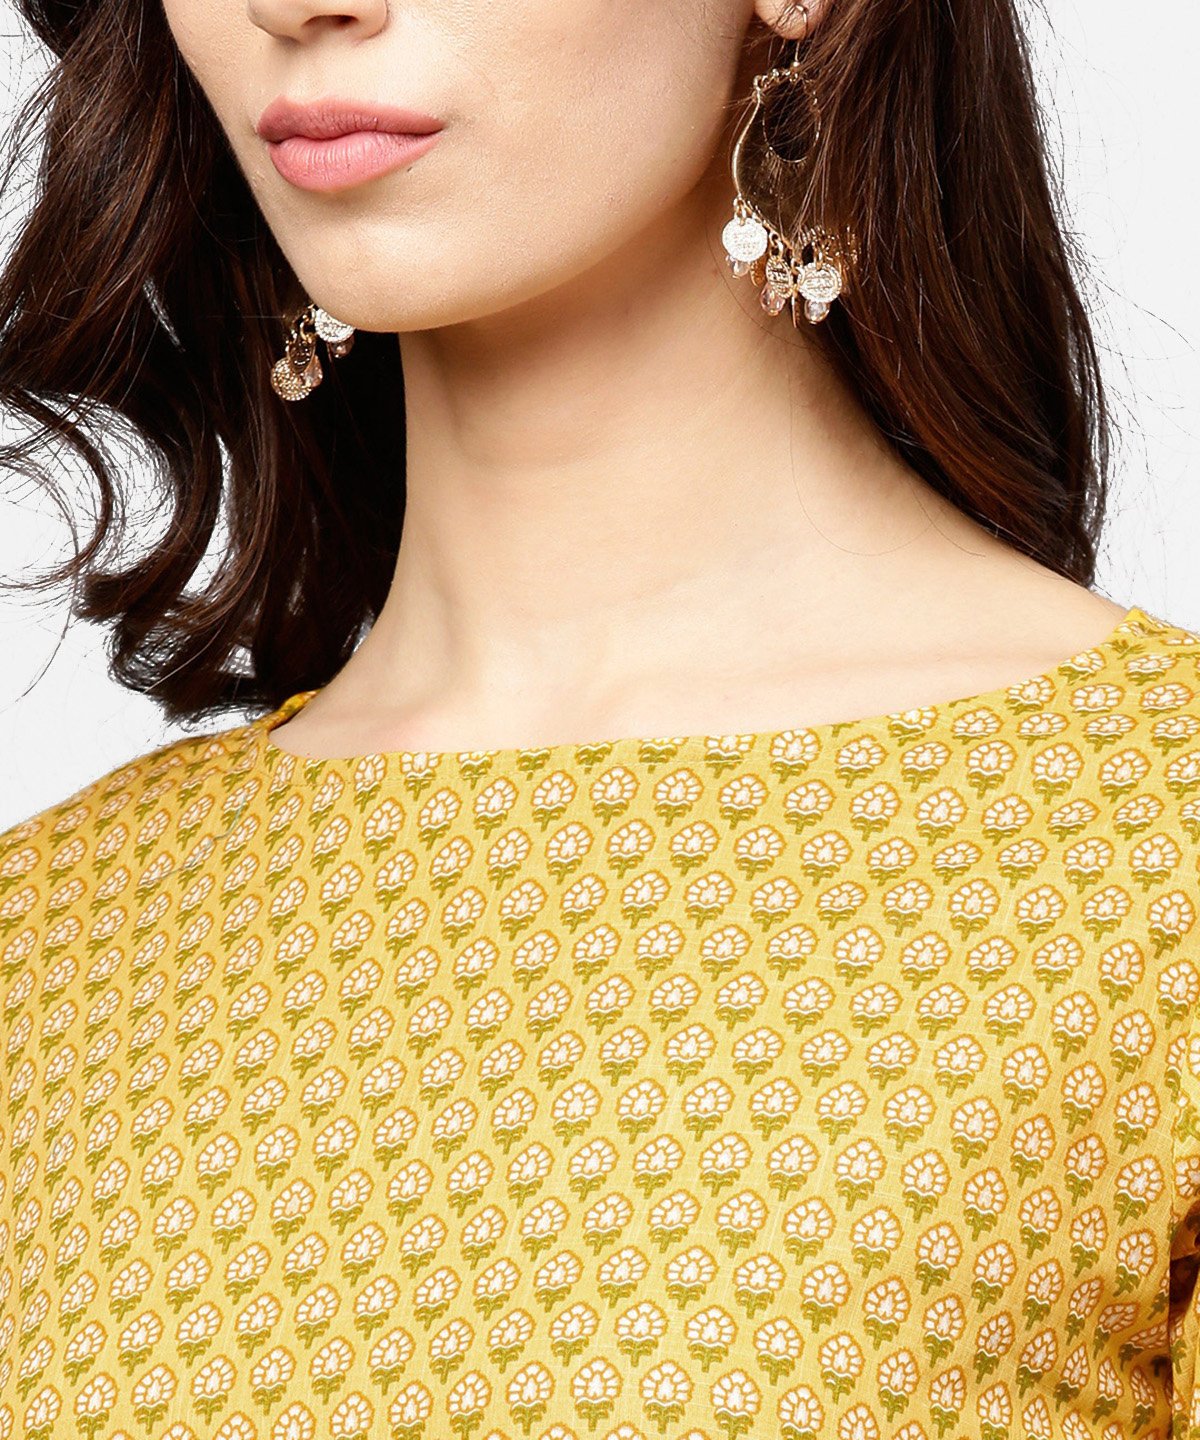 Women's Yellow 3/4Th Sleeve Cotton Kurta With Grey Printed Pallazo - Nayo Clothing